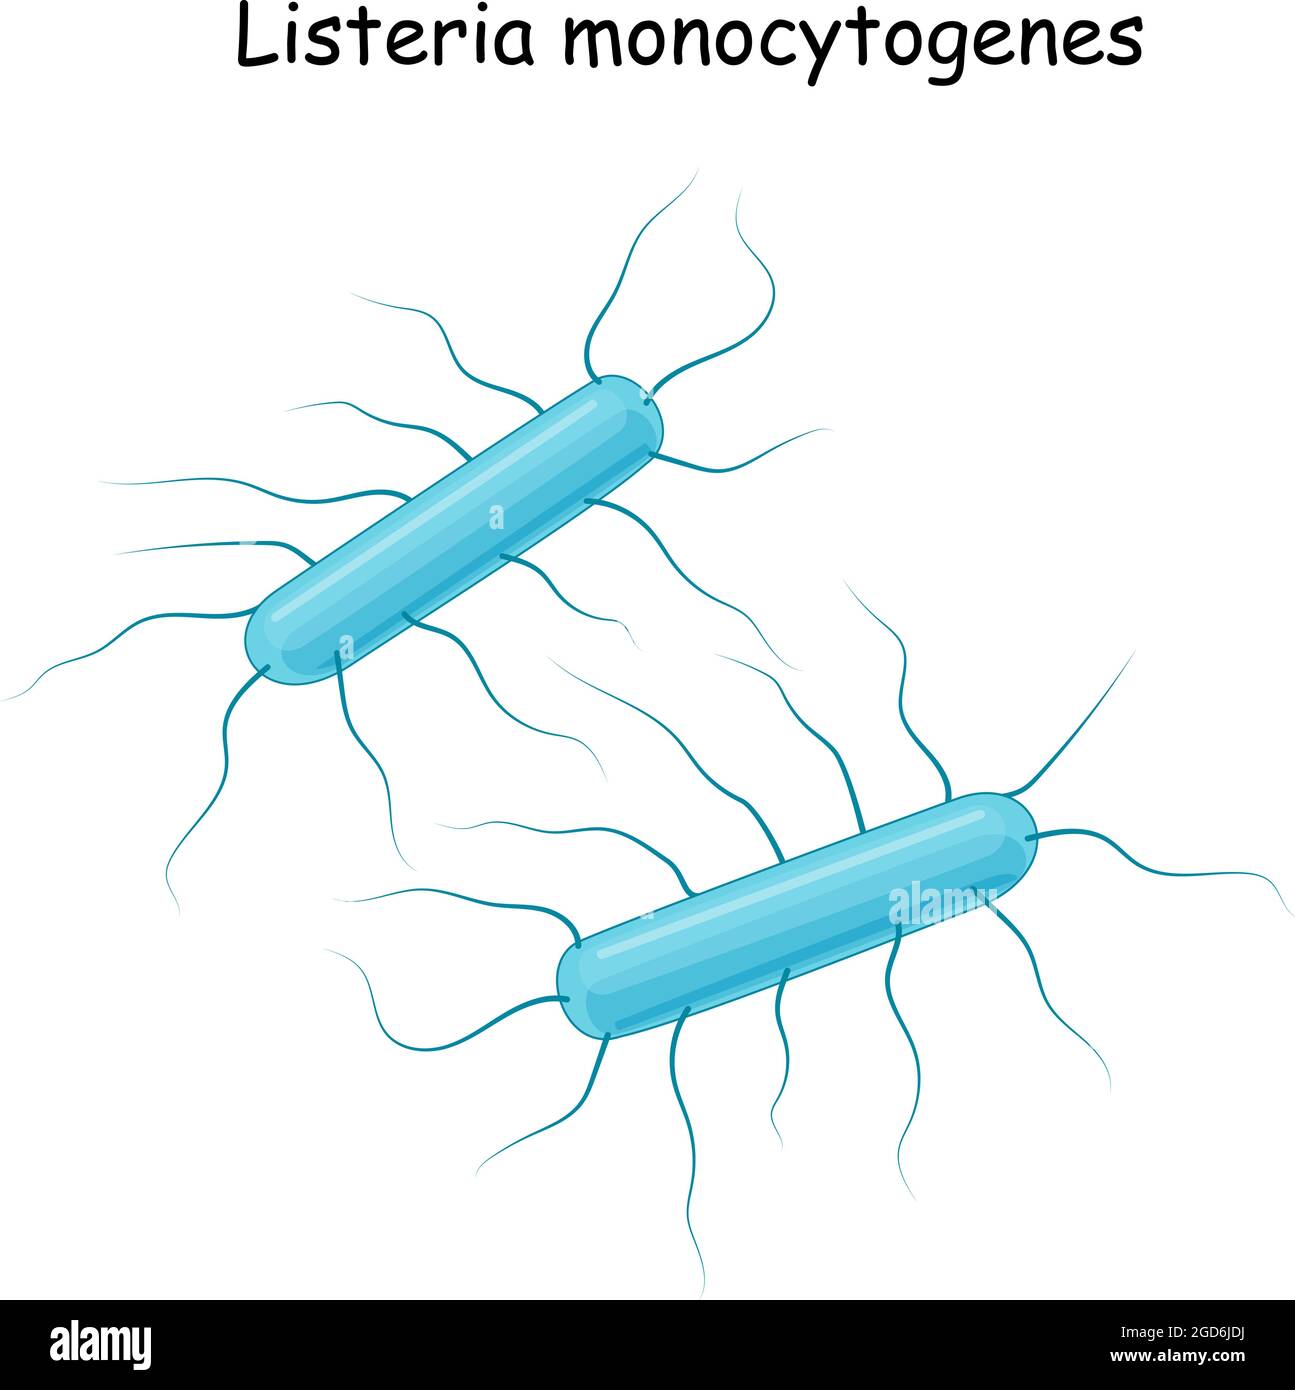 Listeria monocytogenes. Bakterium, das Listeriose verursacht. Infektionskrankheit: Sepsis, Meningitis, Gehirnentzündung. Intrazellulärer Parasit. Vektor Stock Vektor